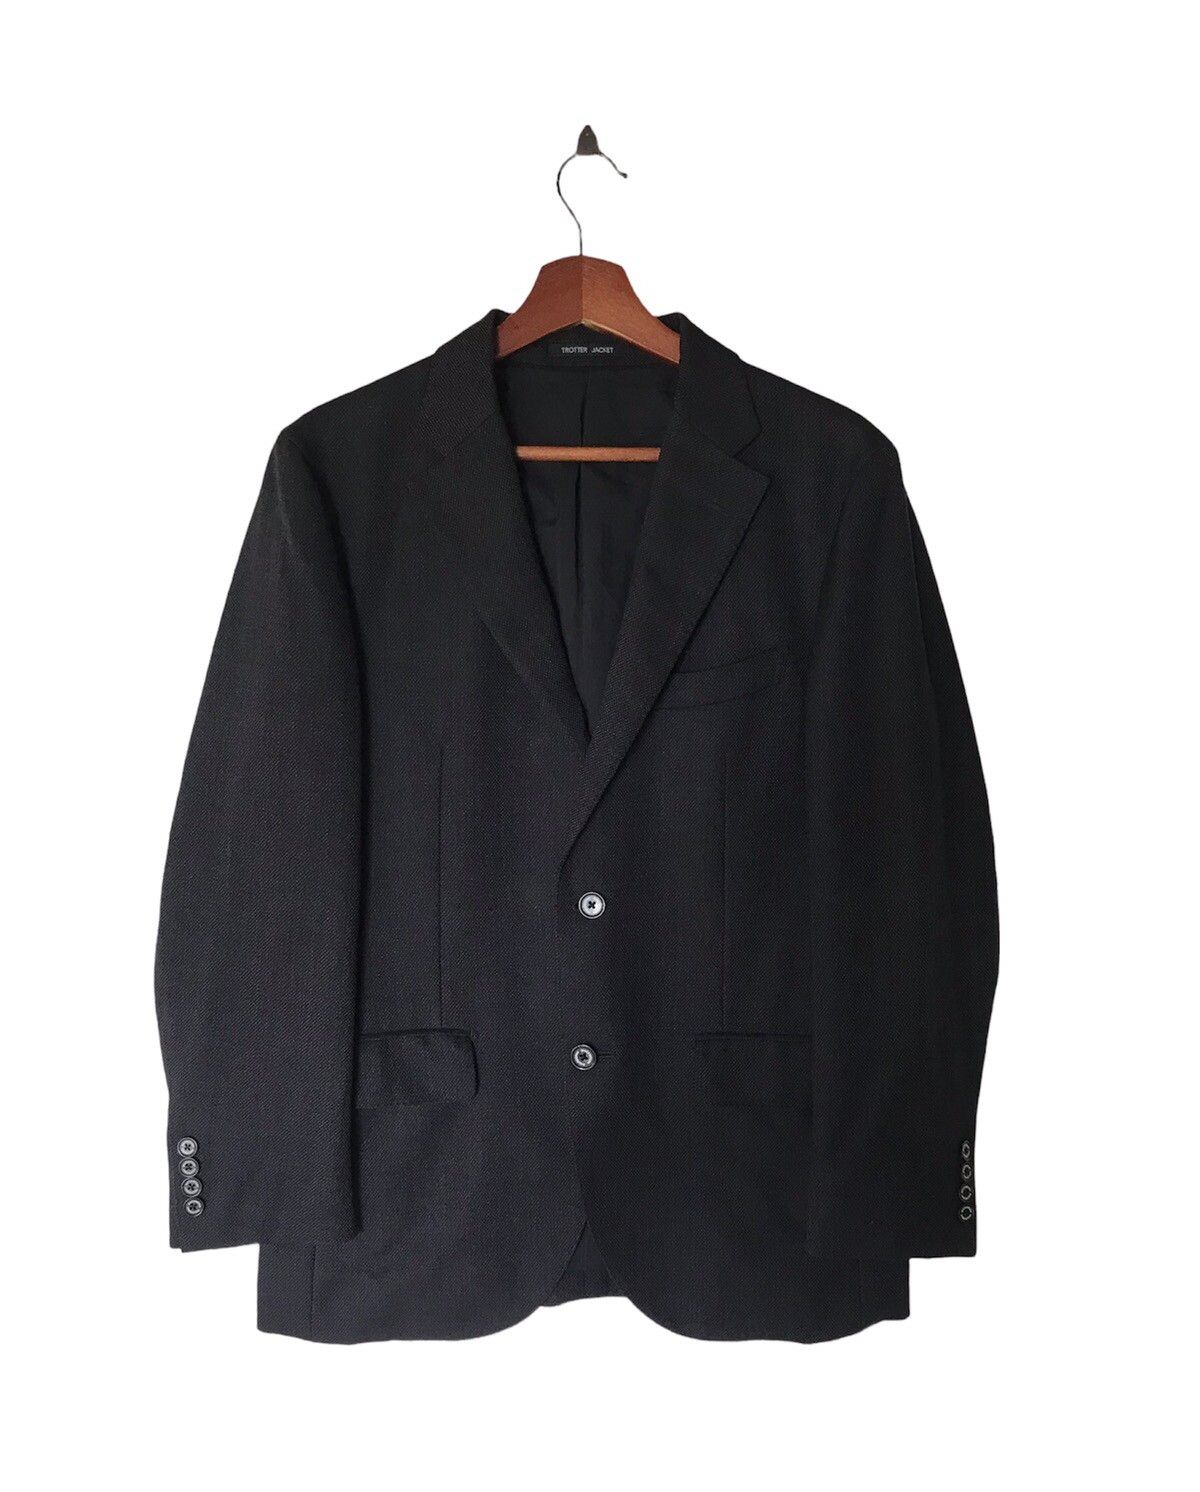 Mackintosh Philosophy Suit/Blazer - 1